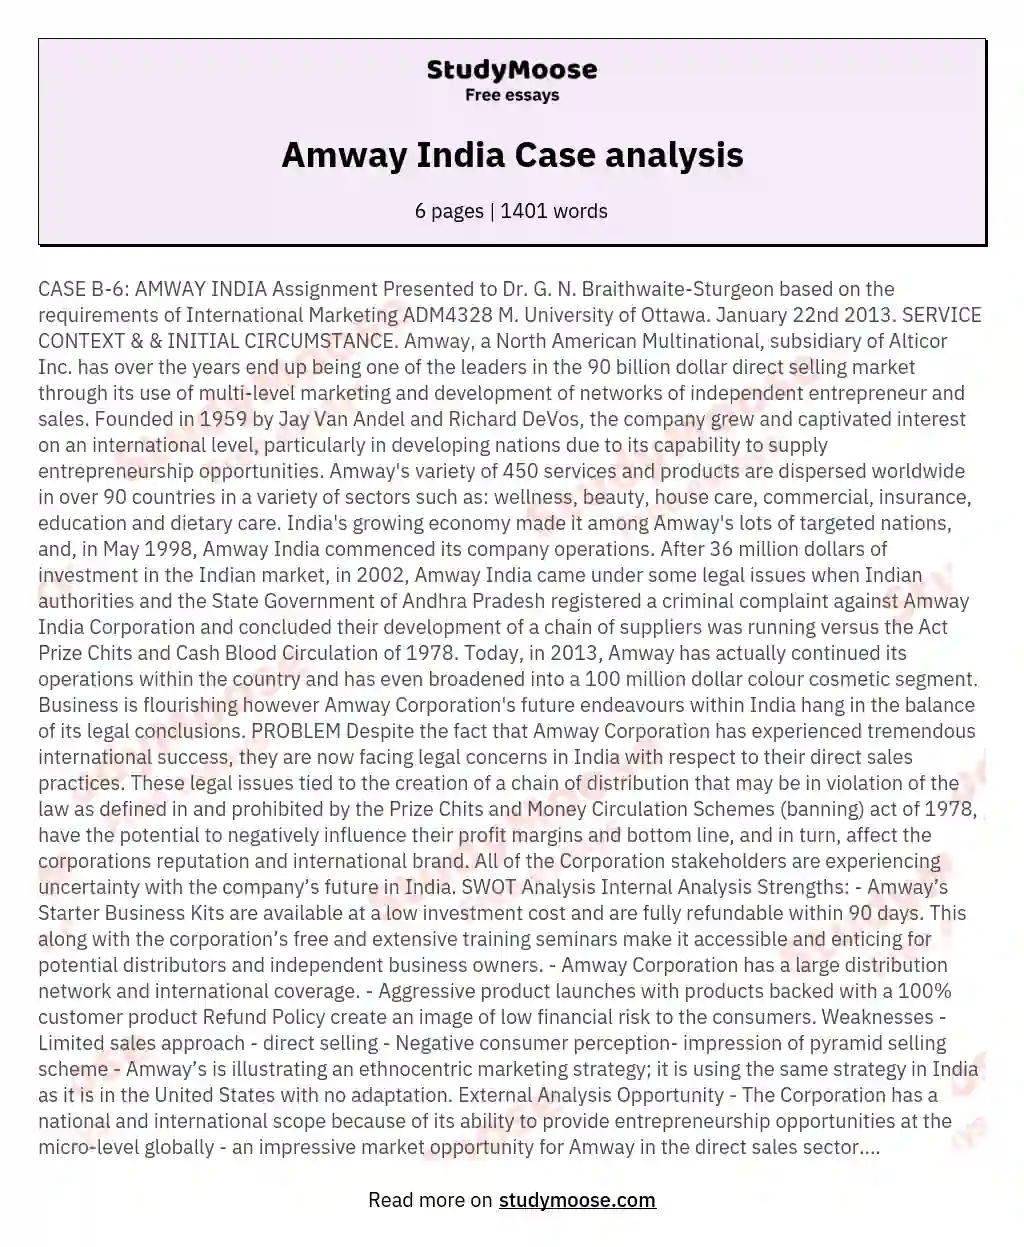 Amway India Case analysis essay